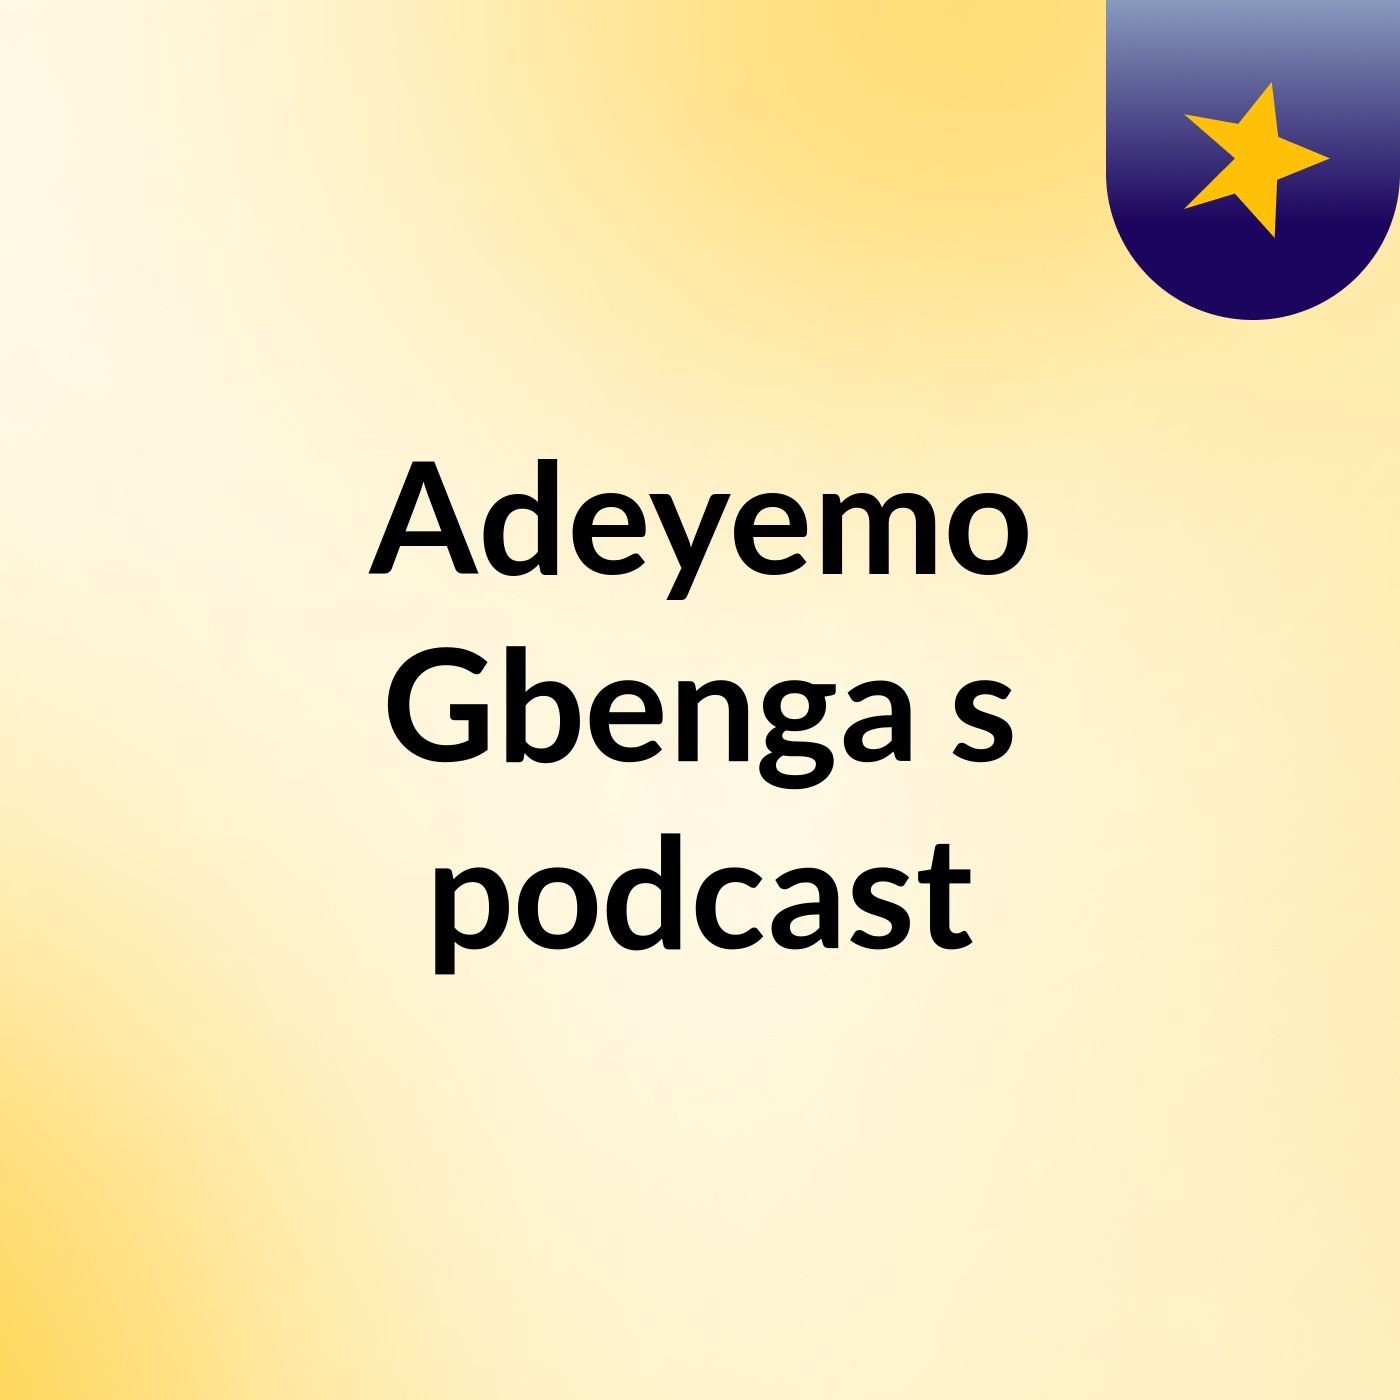 Episode 3 - Adeyemo Gbenga's podcast